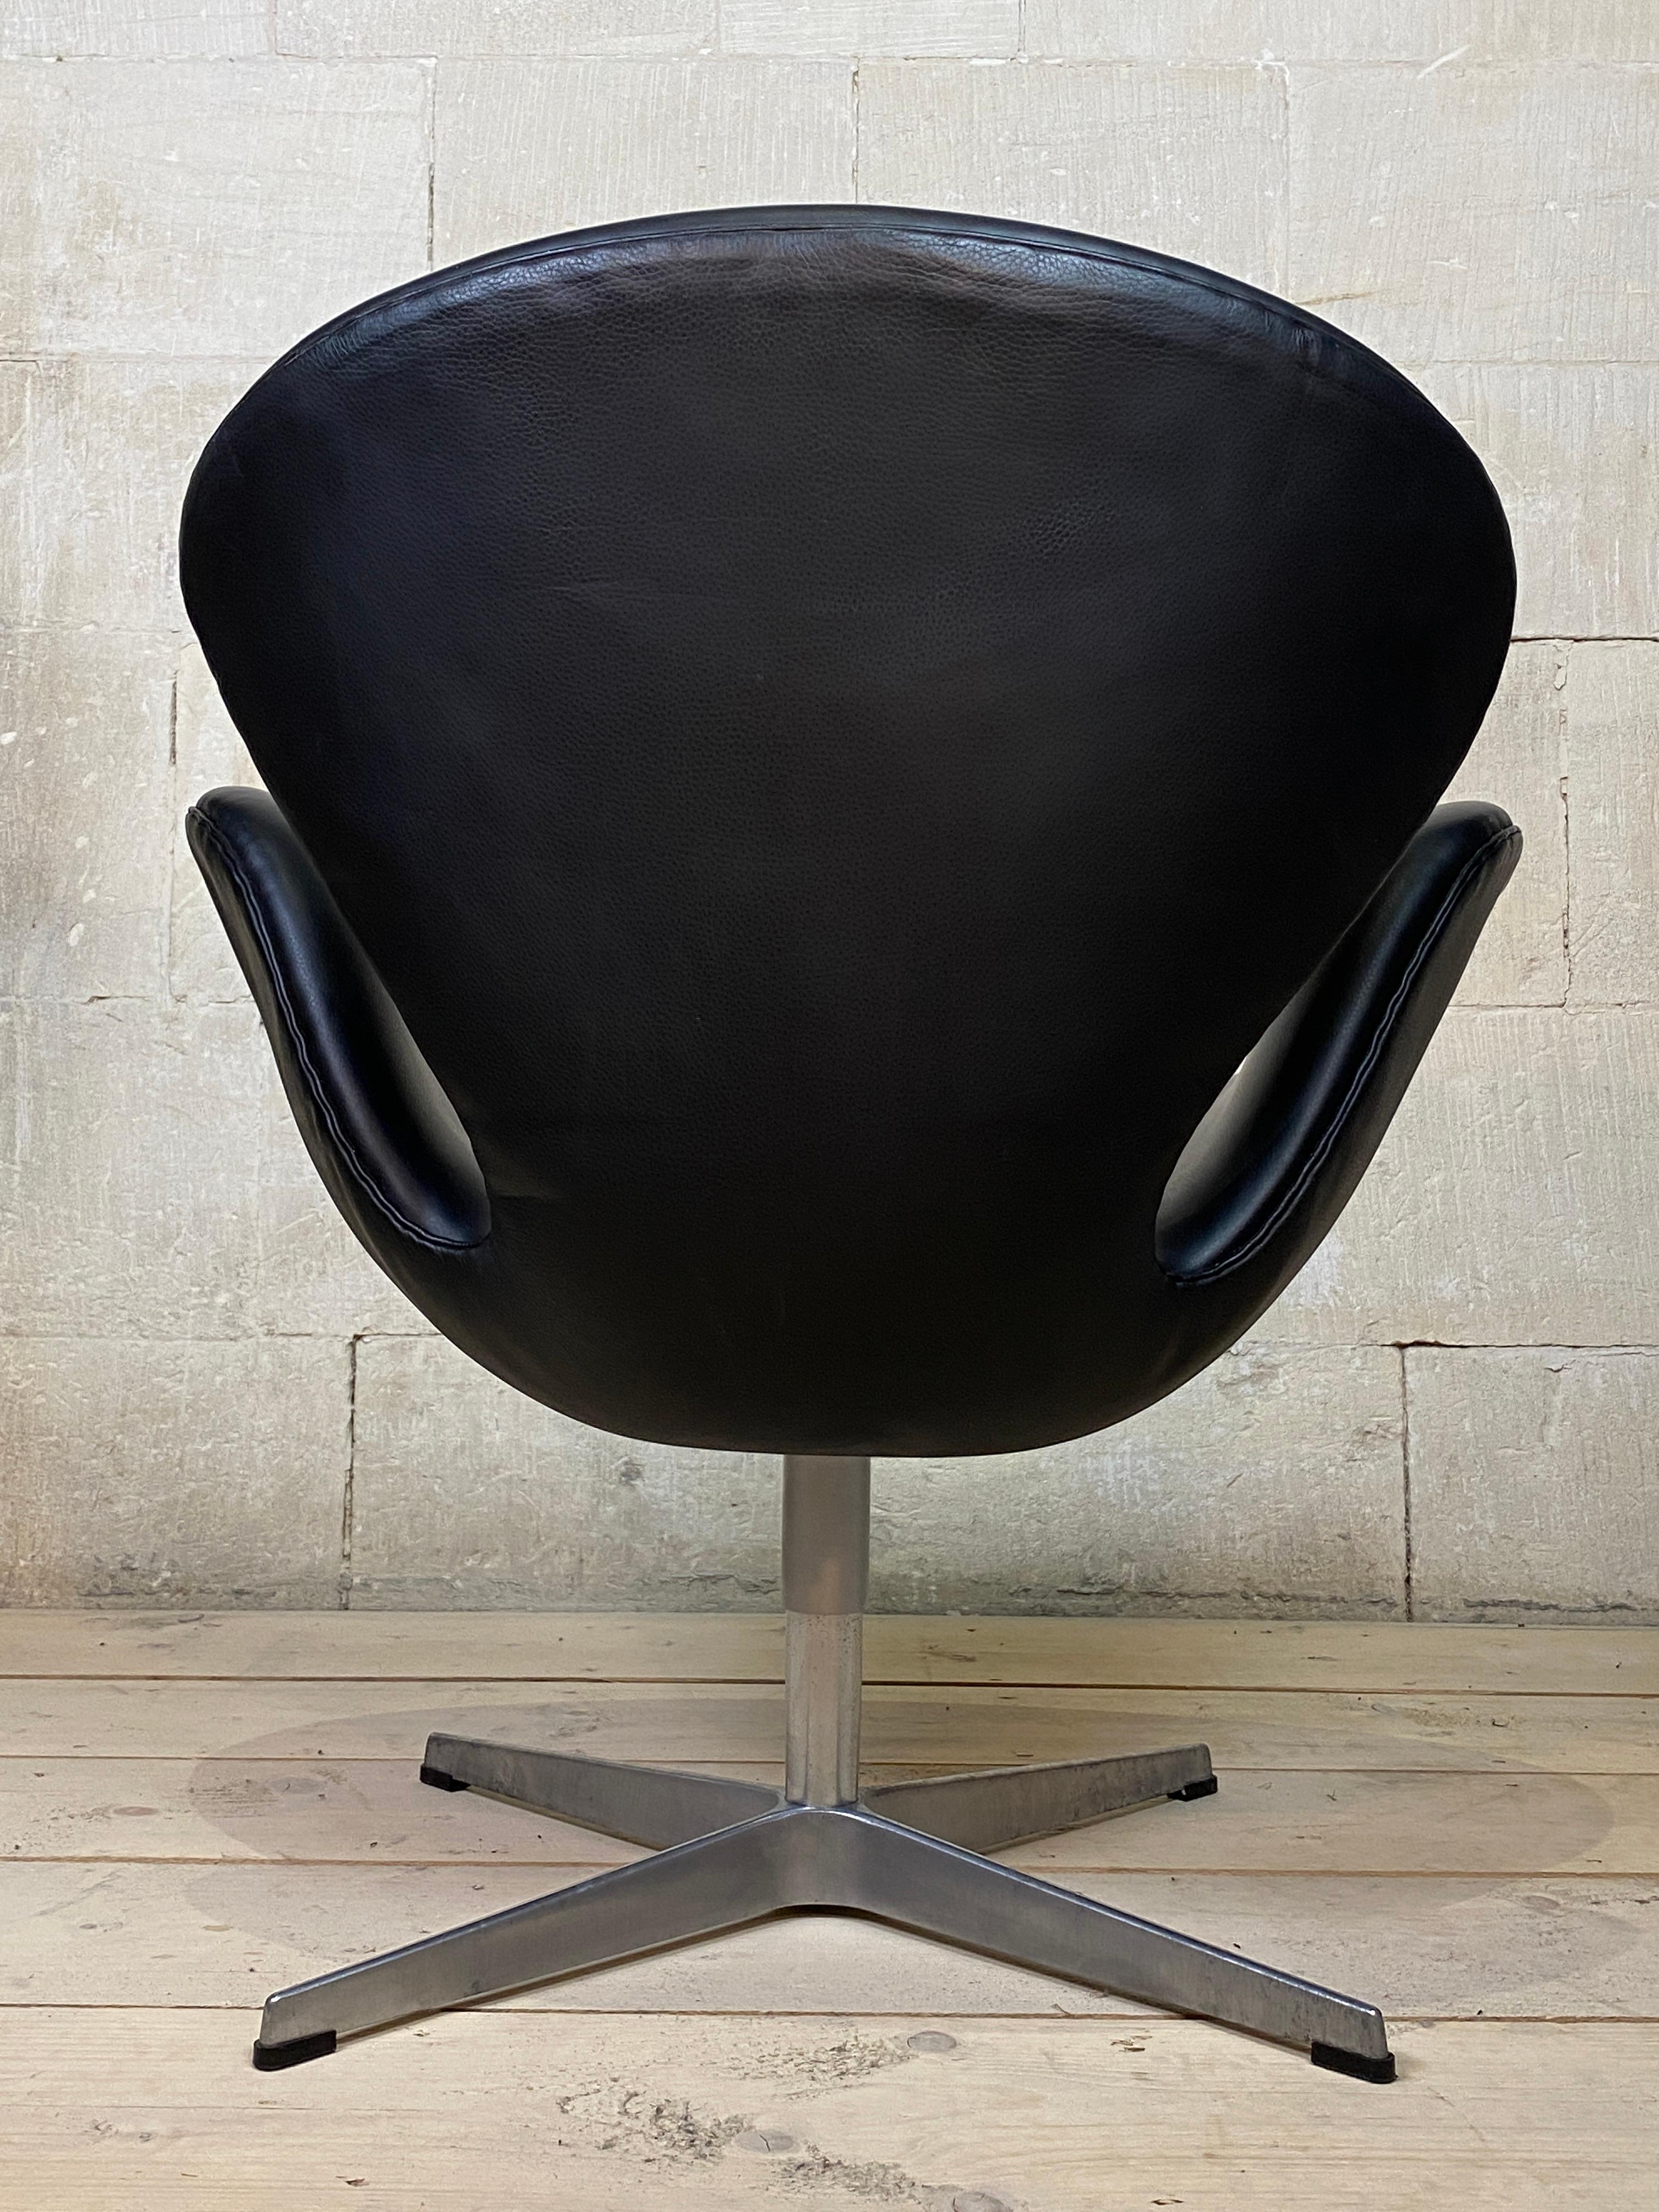 Mid-20th Century Arne Jacobsen Swan Chairs Fritz Hansen Pair Mod 3320 Black Leather 2006 Denmark